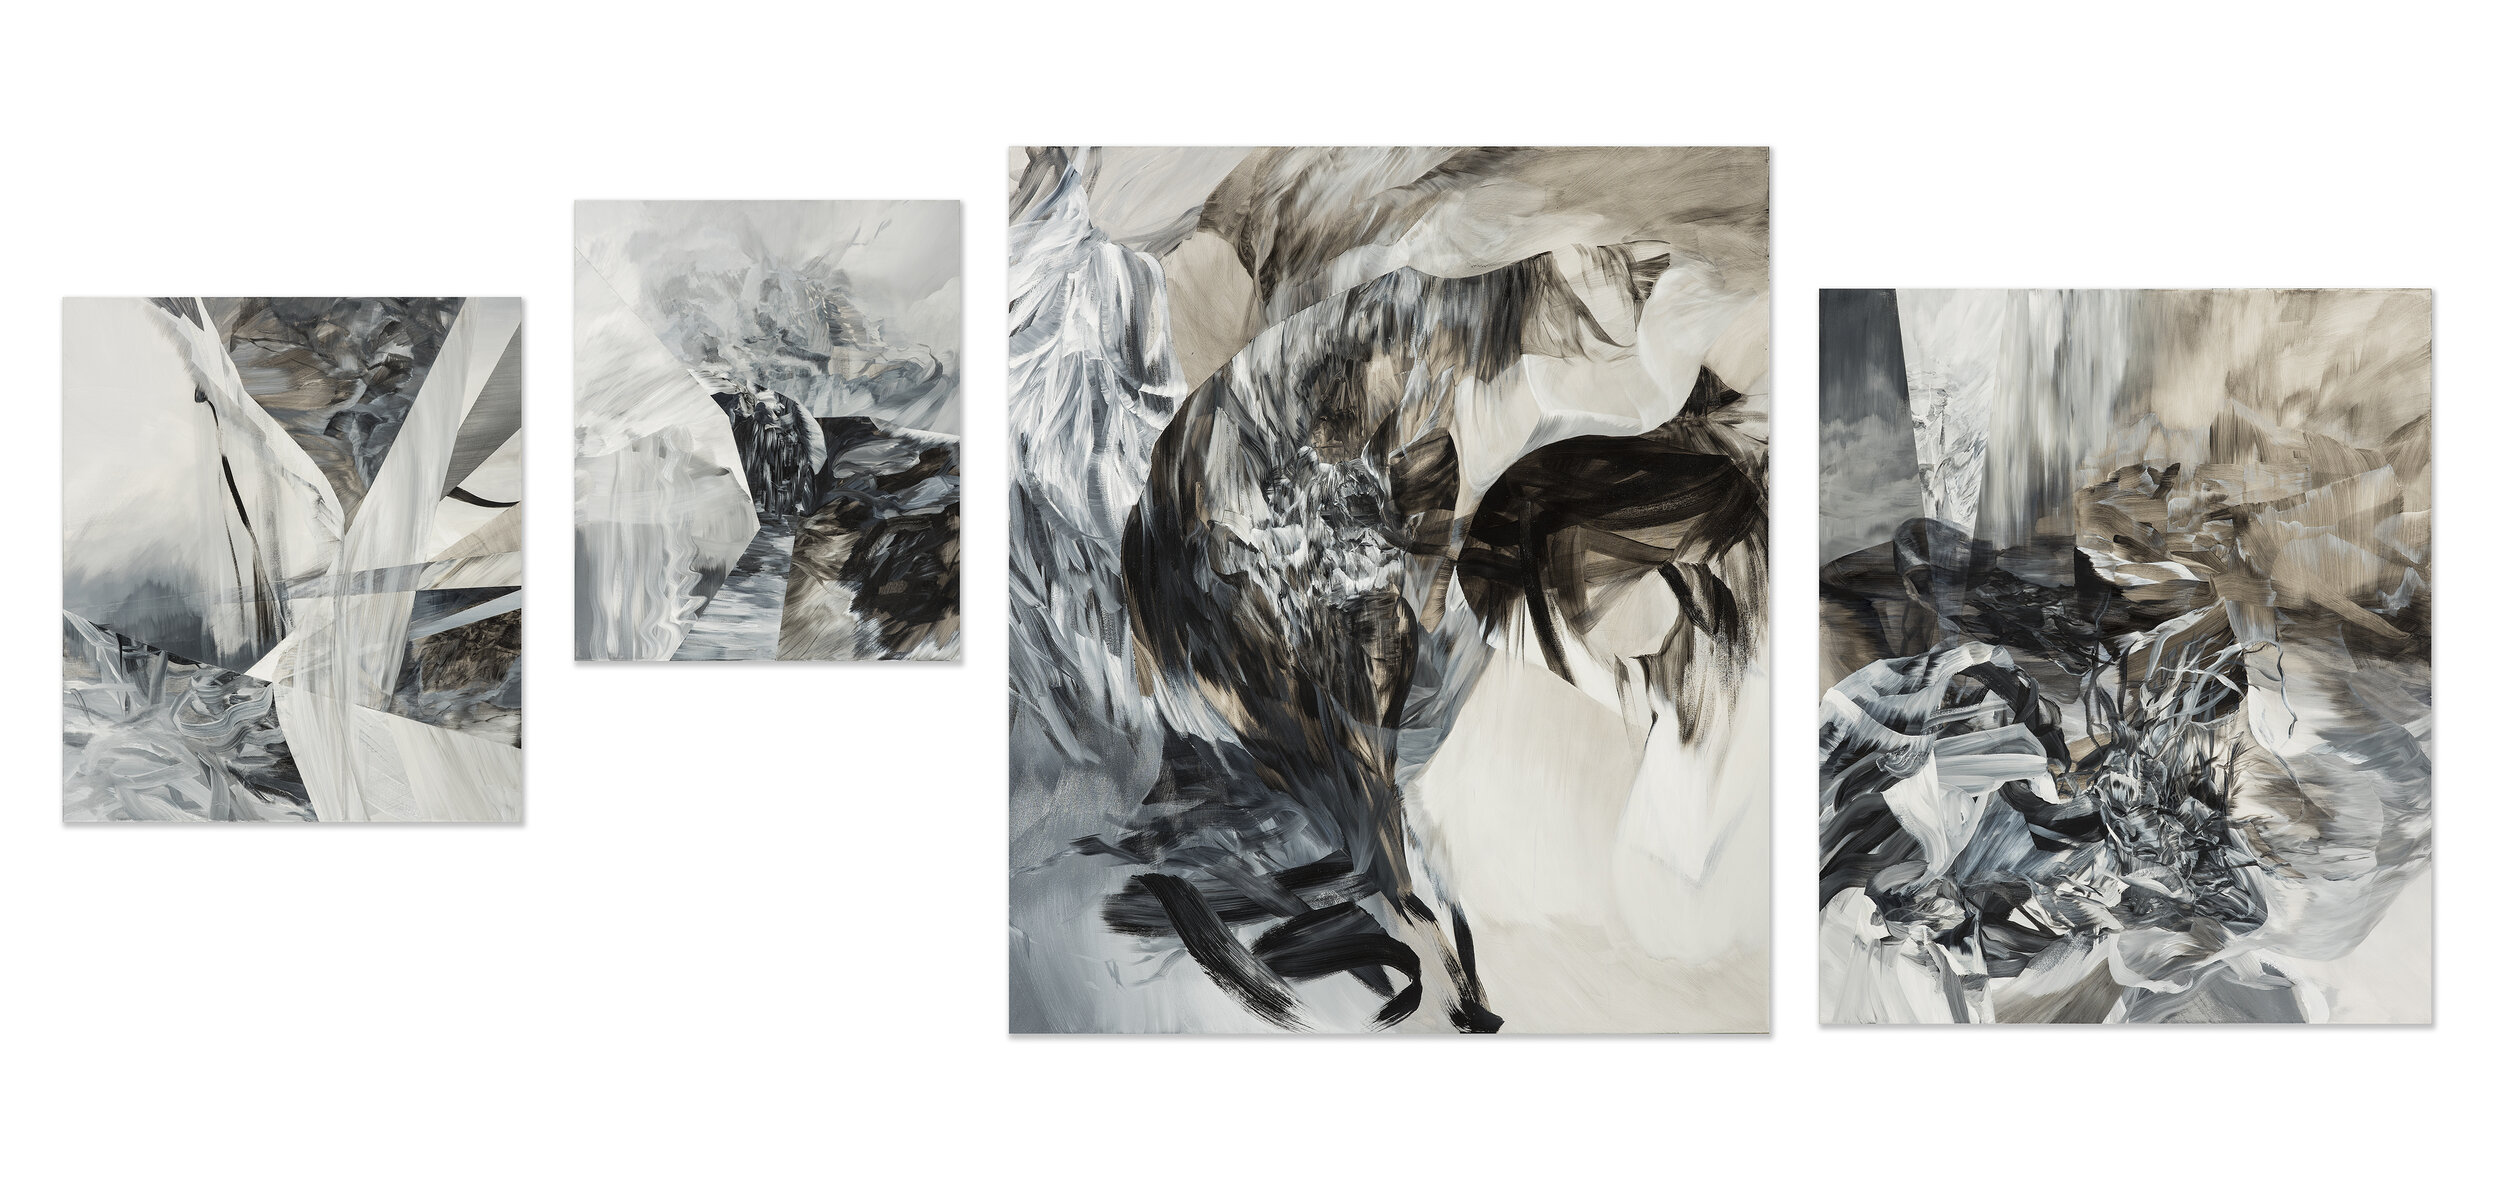   Assembly of Deliriums  - Quartet, 2015  acrylic on canvas  84” x 126” 